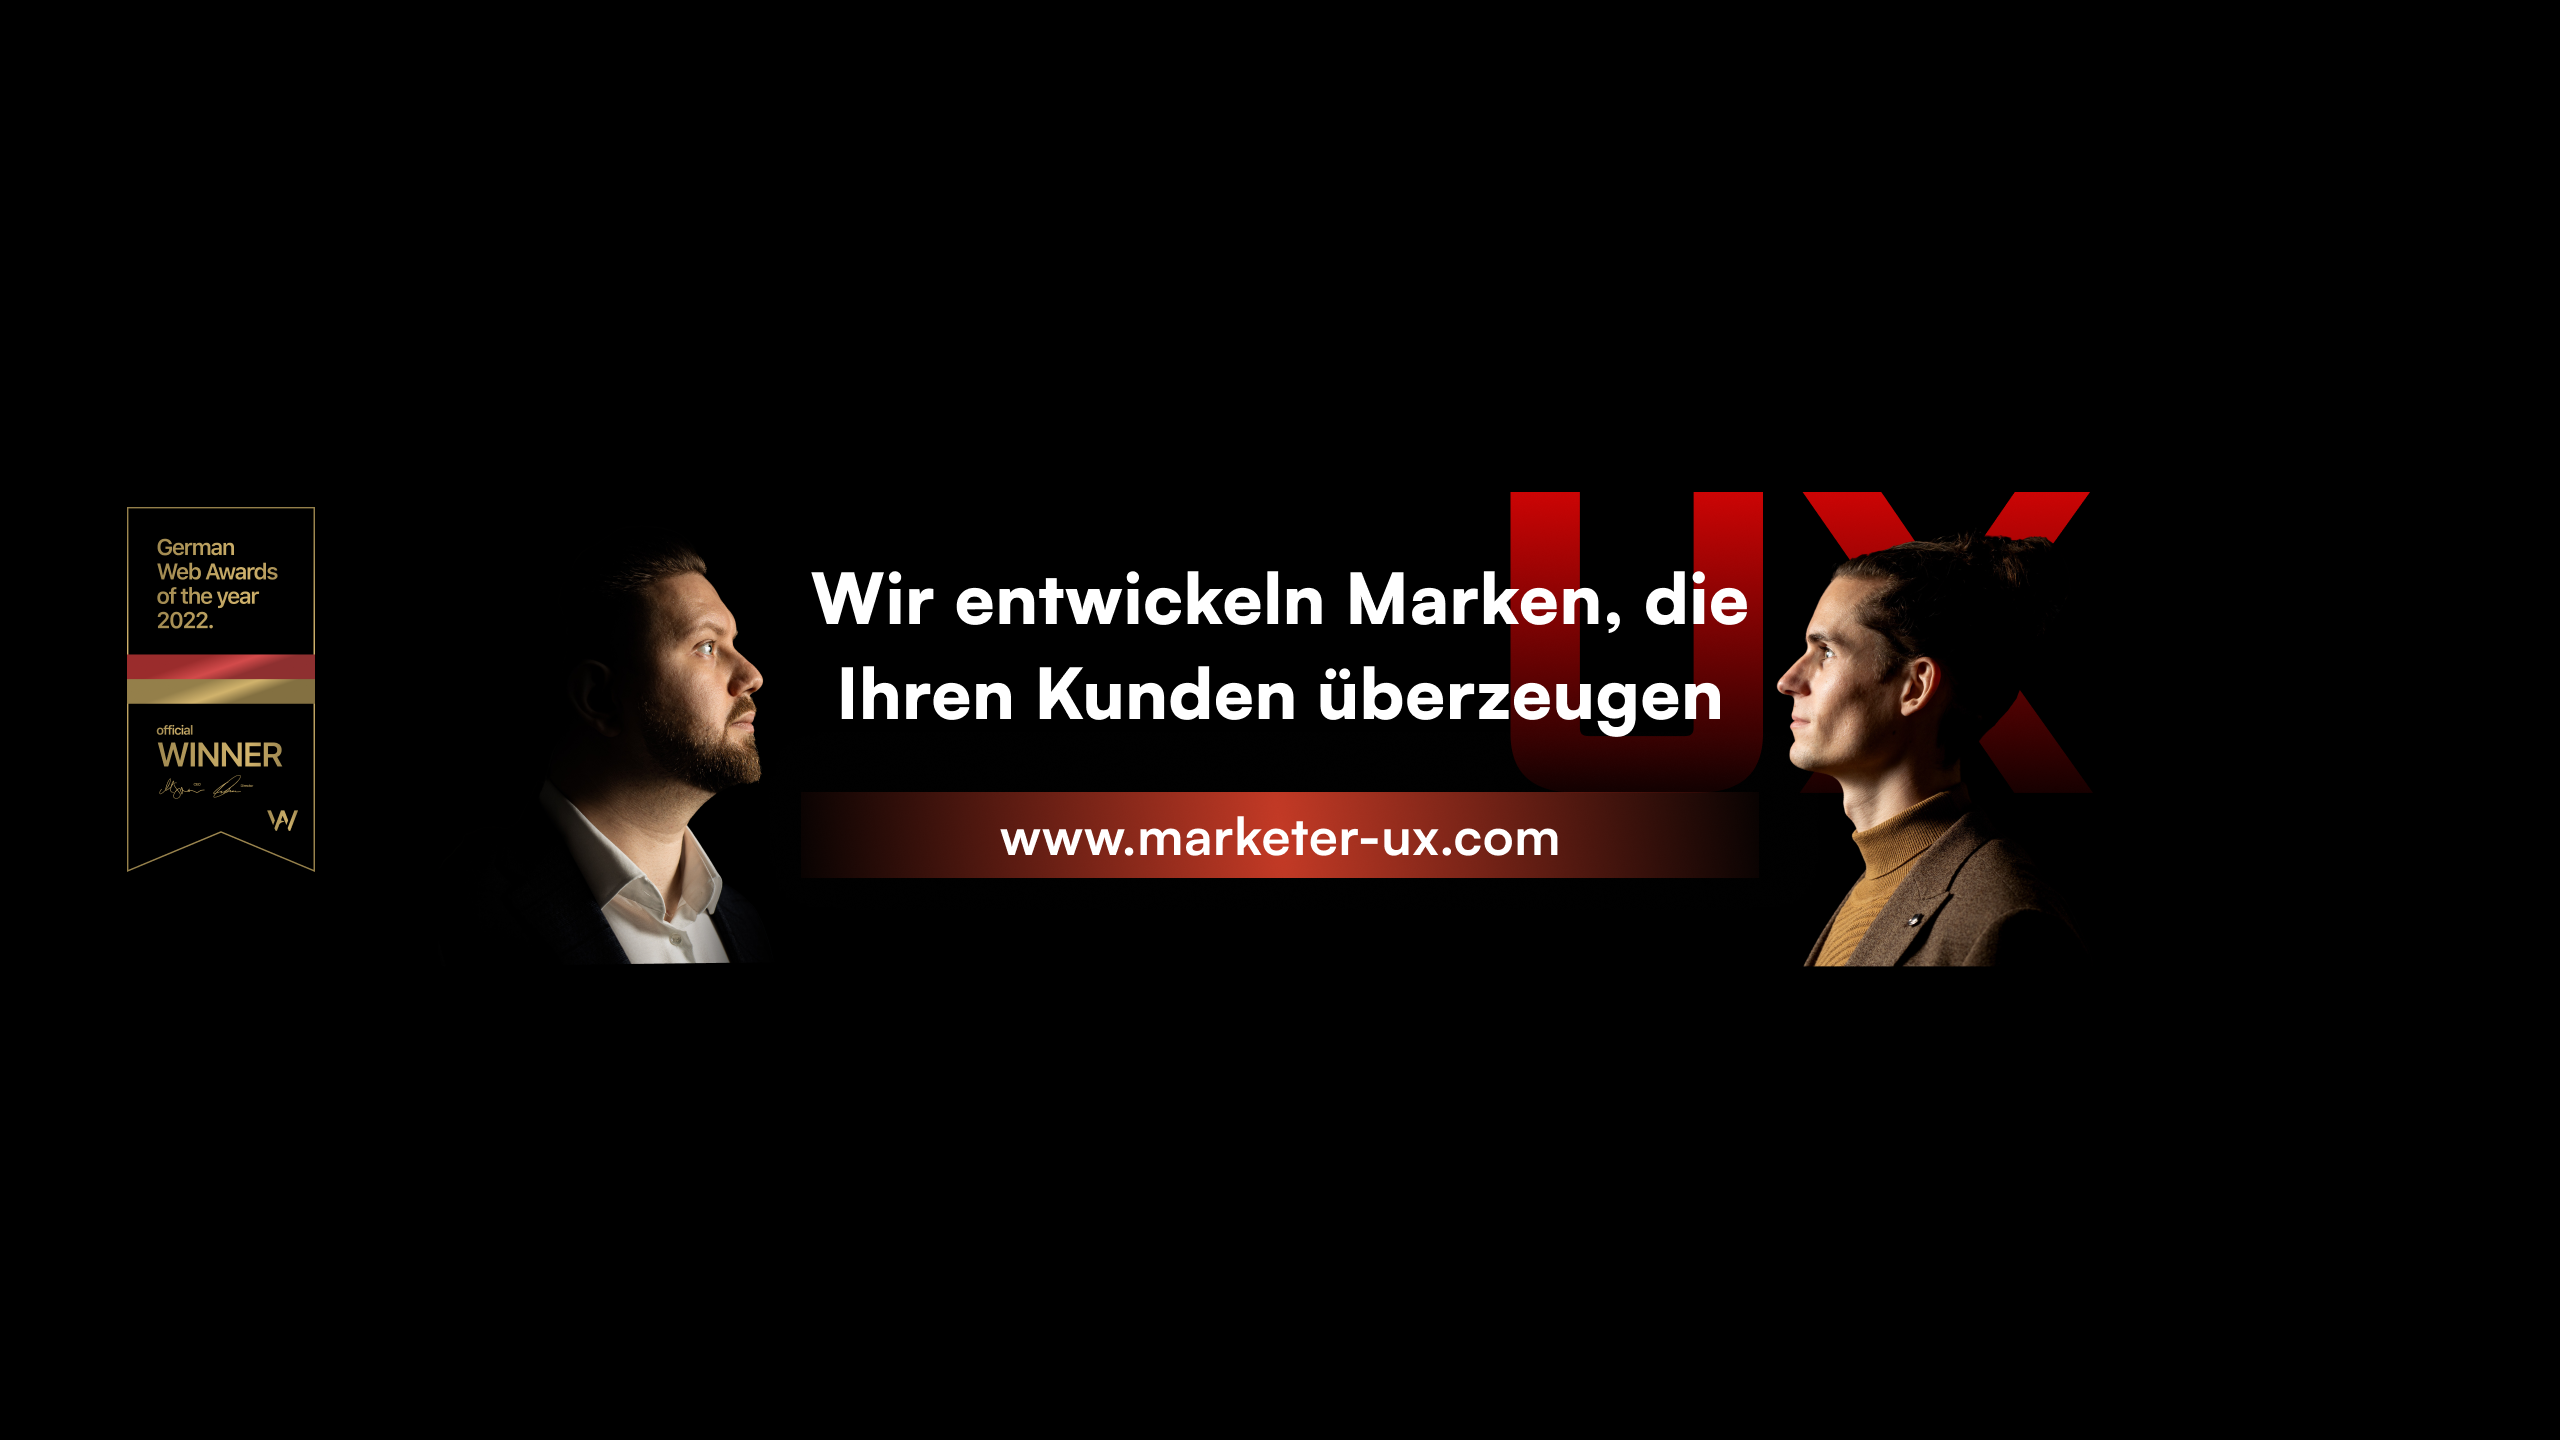 marketer UX / agency from Düsseldorf / Background